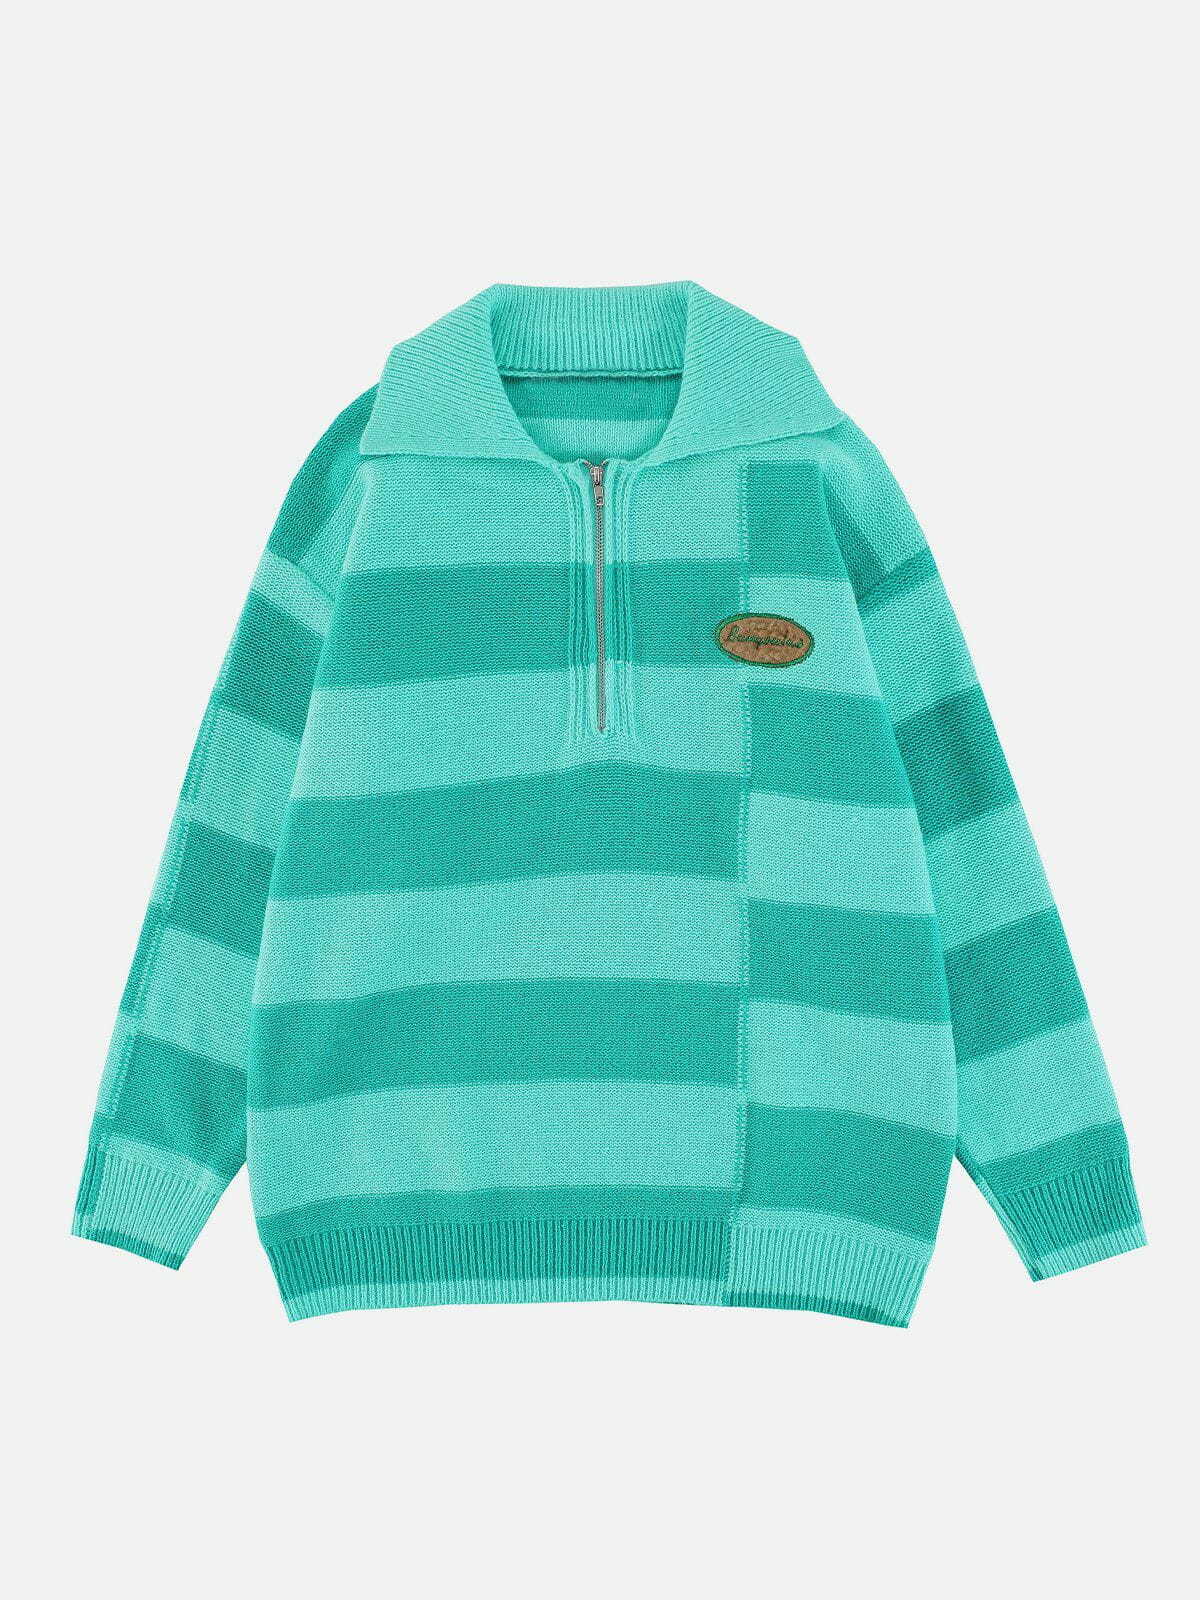 stylish stripes halfzip sweater urban & edgy knitwear 5305